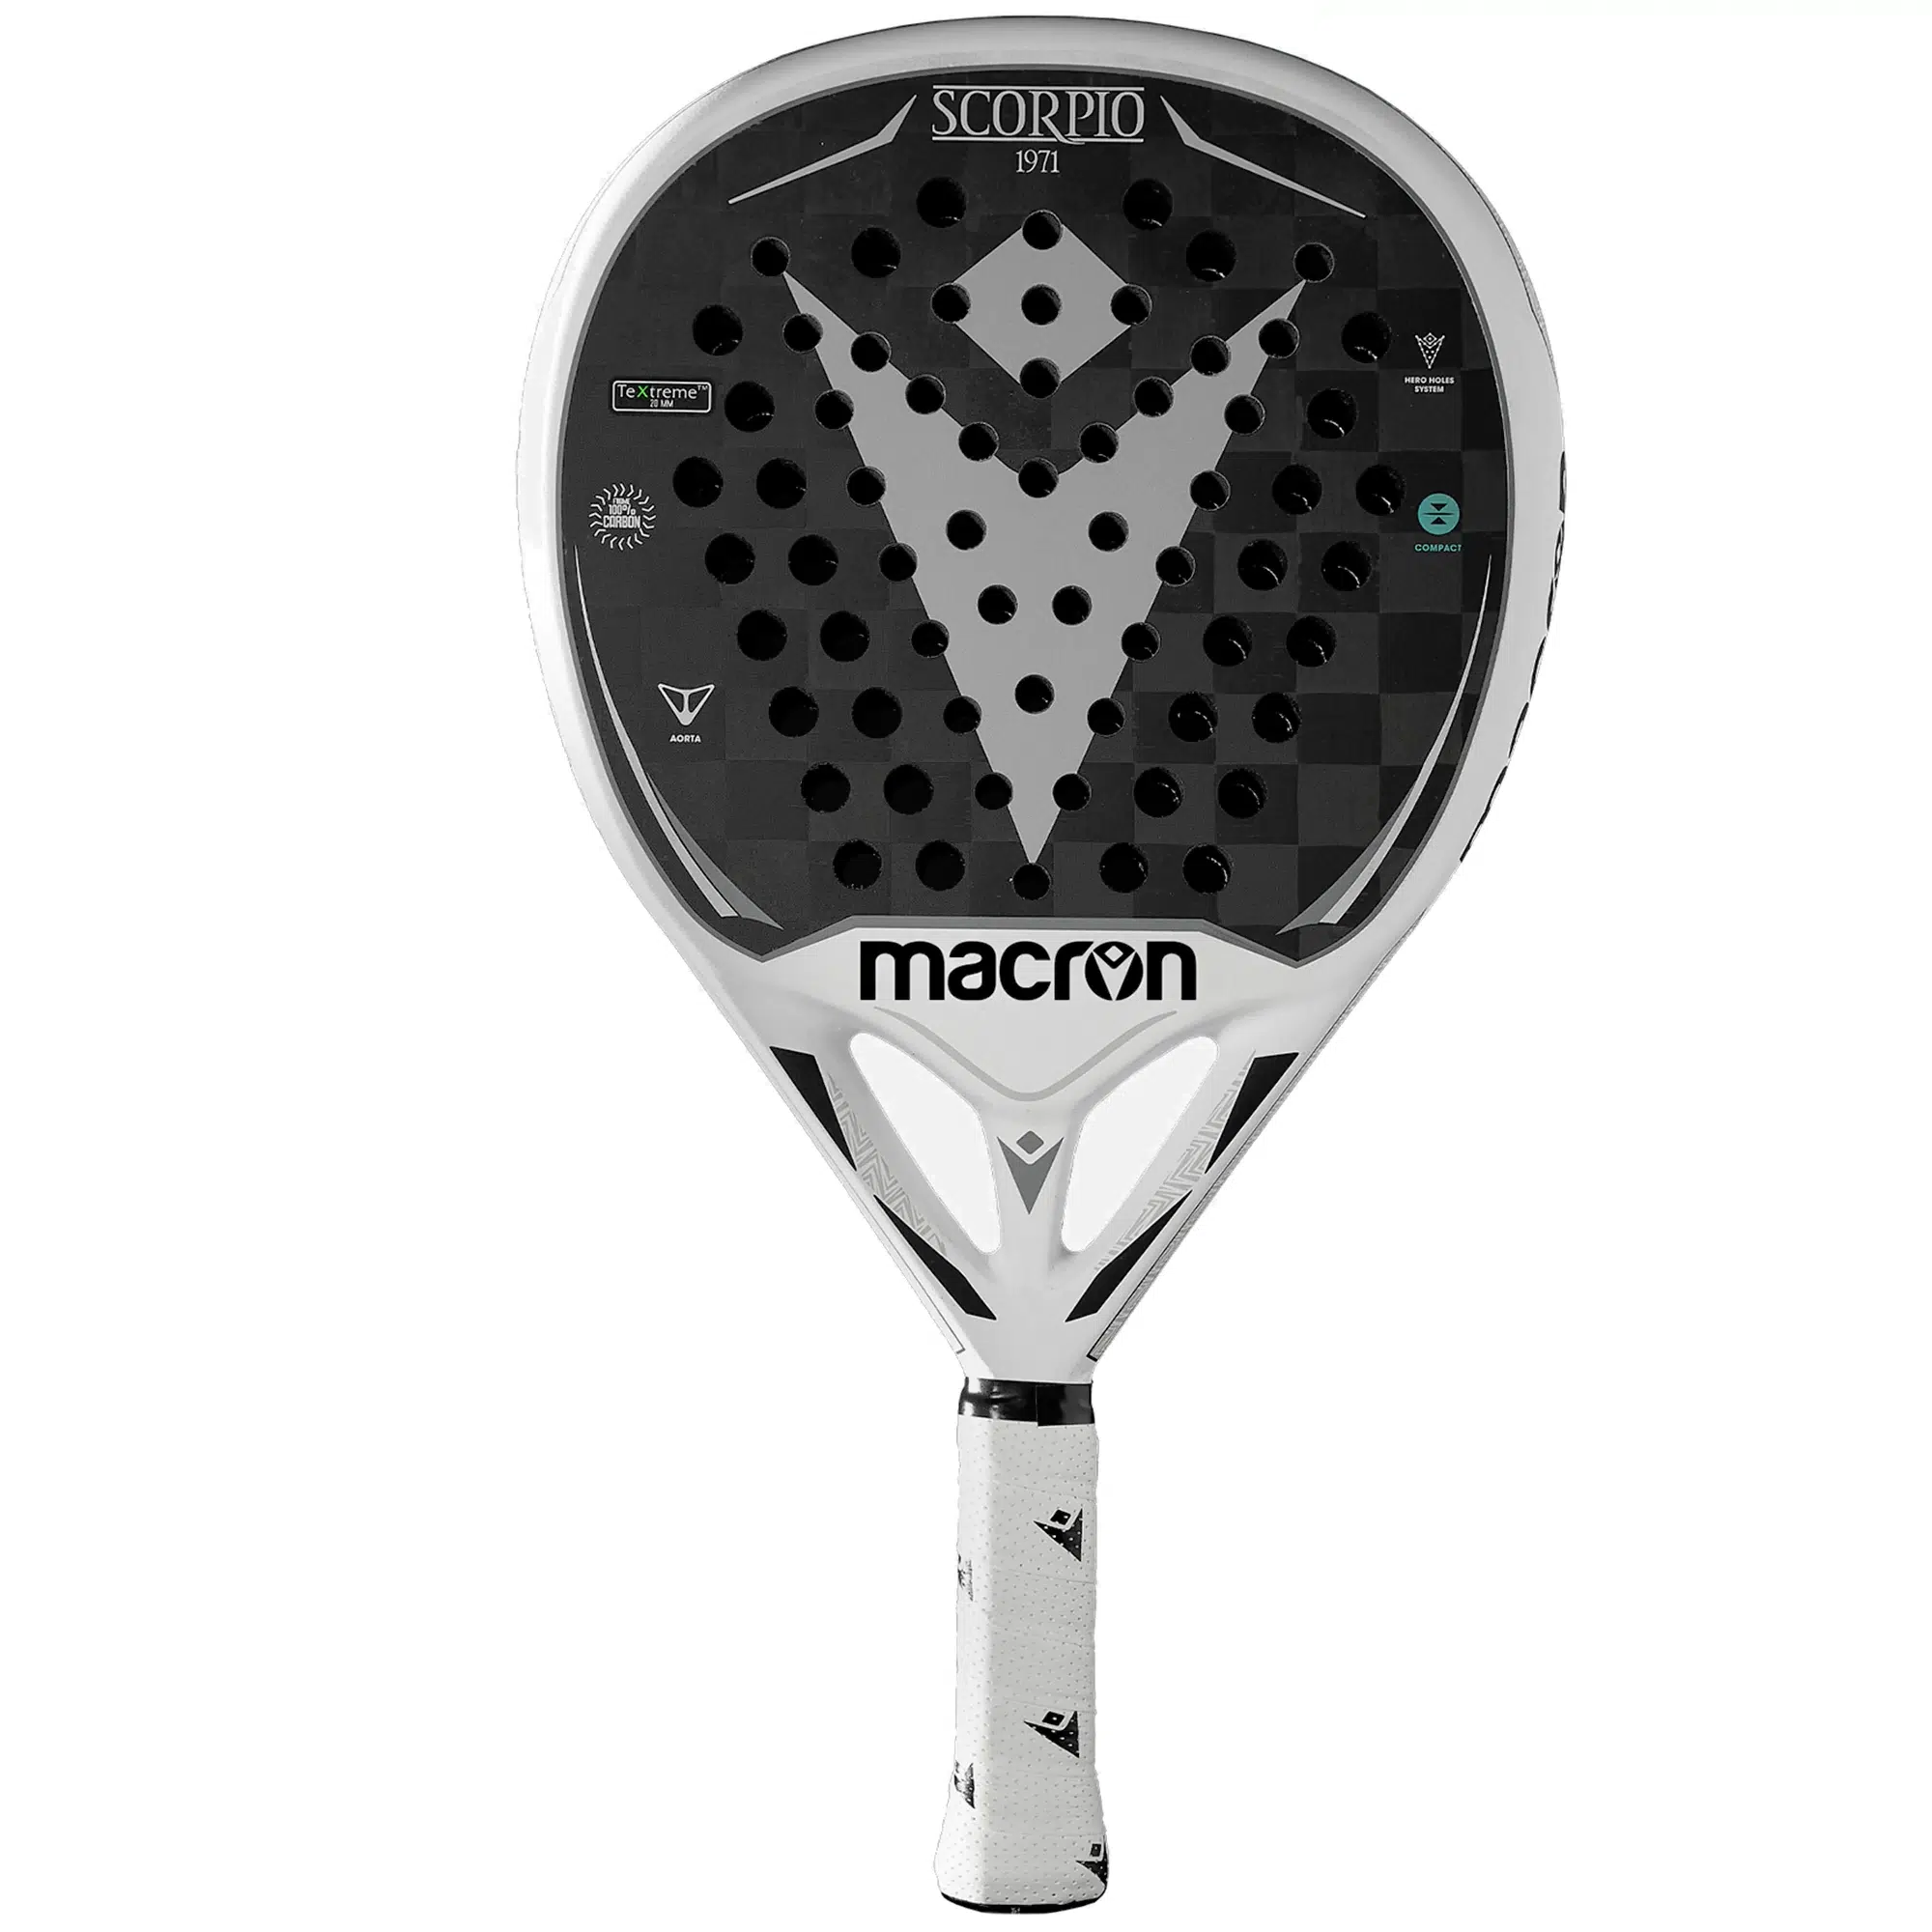 Macron Padel Tennis Clothing and Equipment